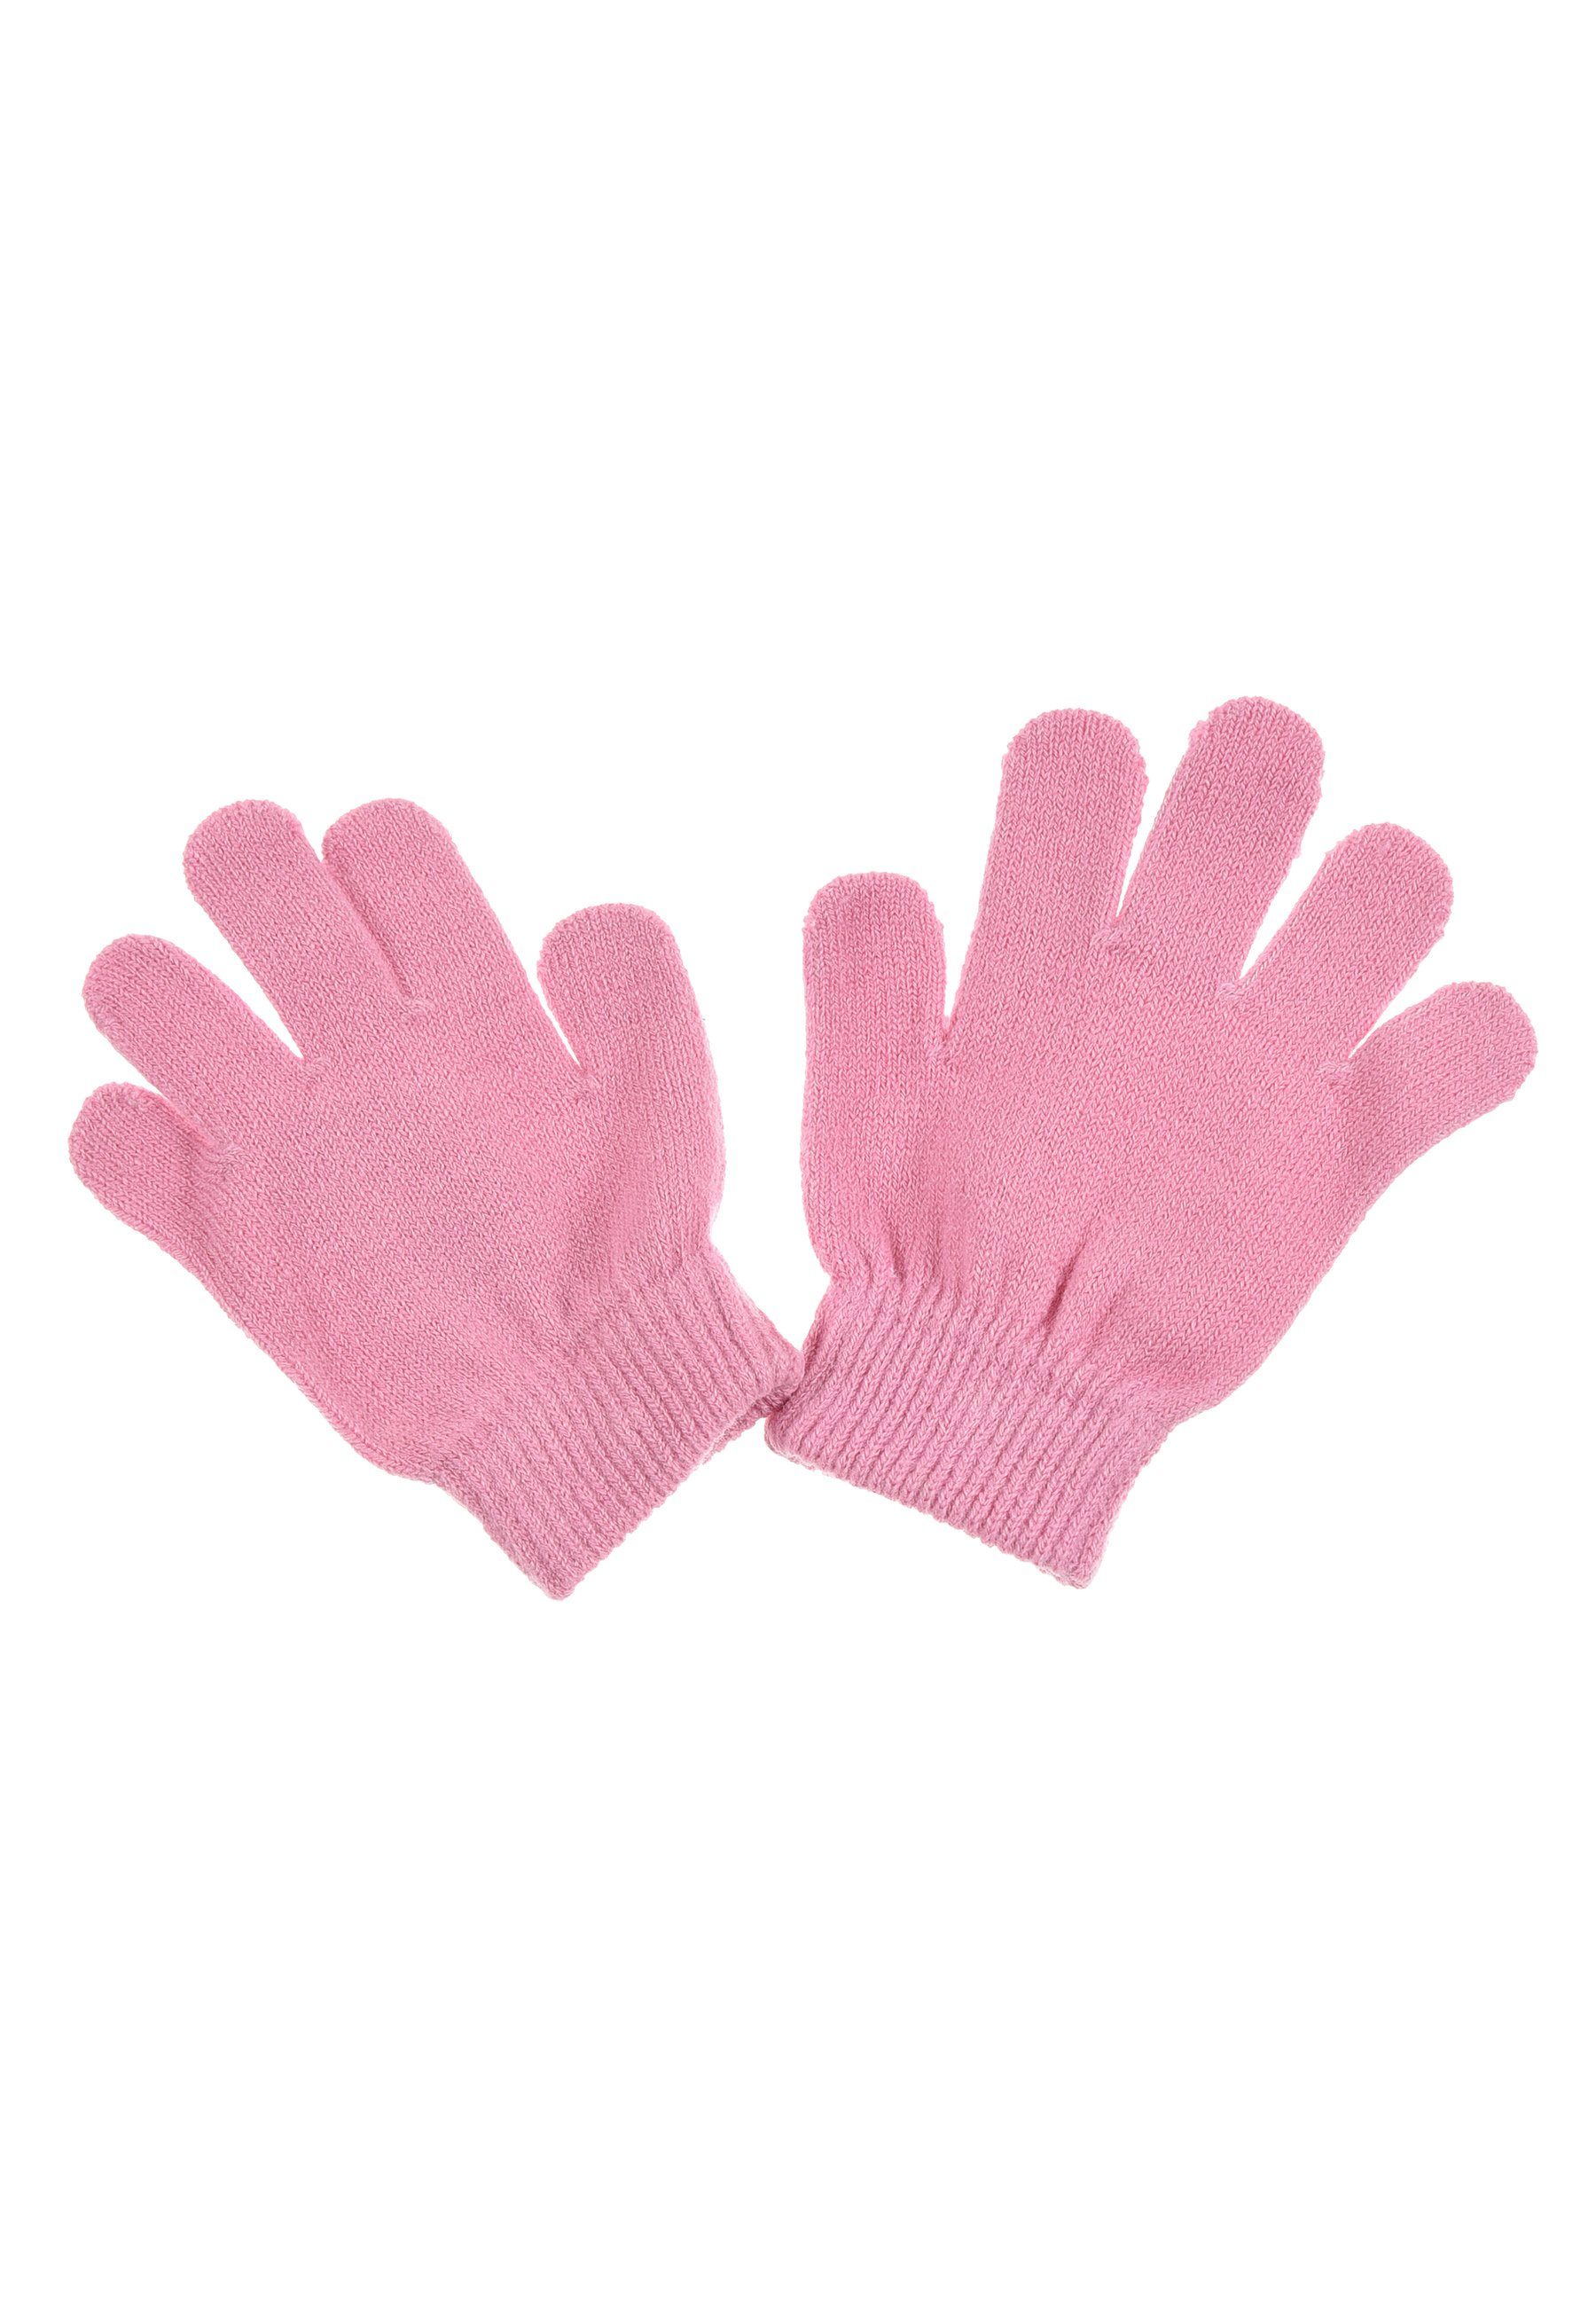 Handschuhe Kinder Wutz Mütze Peppa Peppa Bommelmütze Rosa Winter-Set (SET) Pig Mädchen und